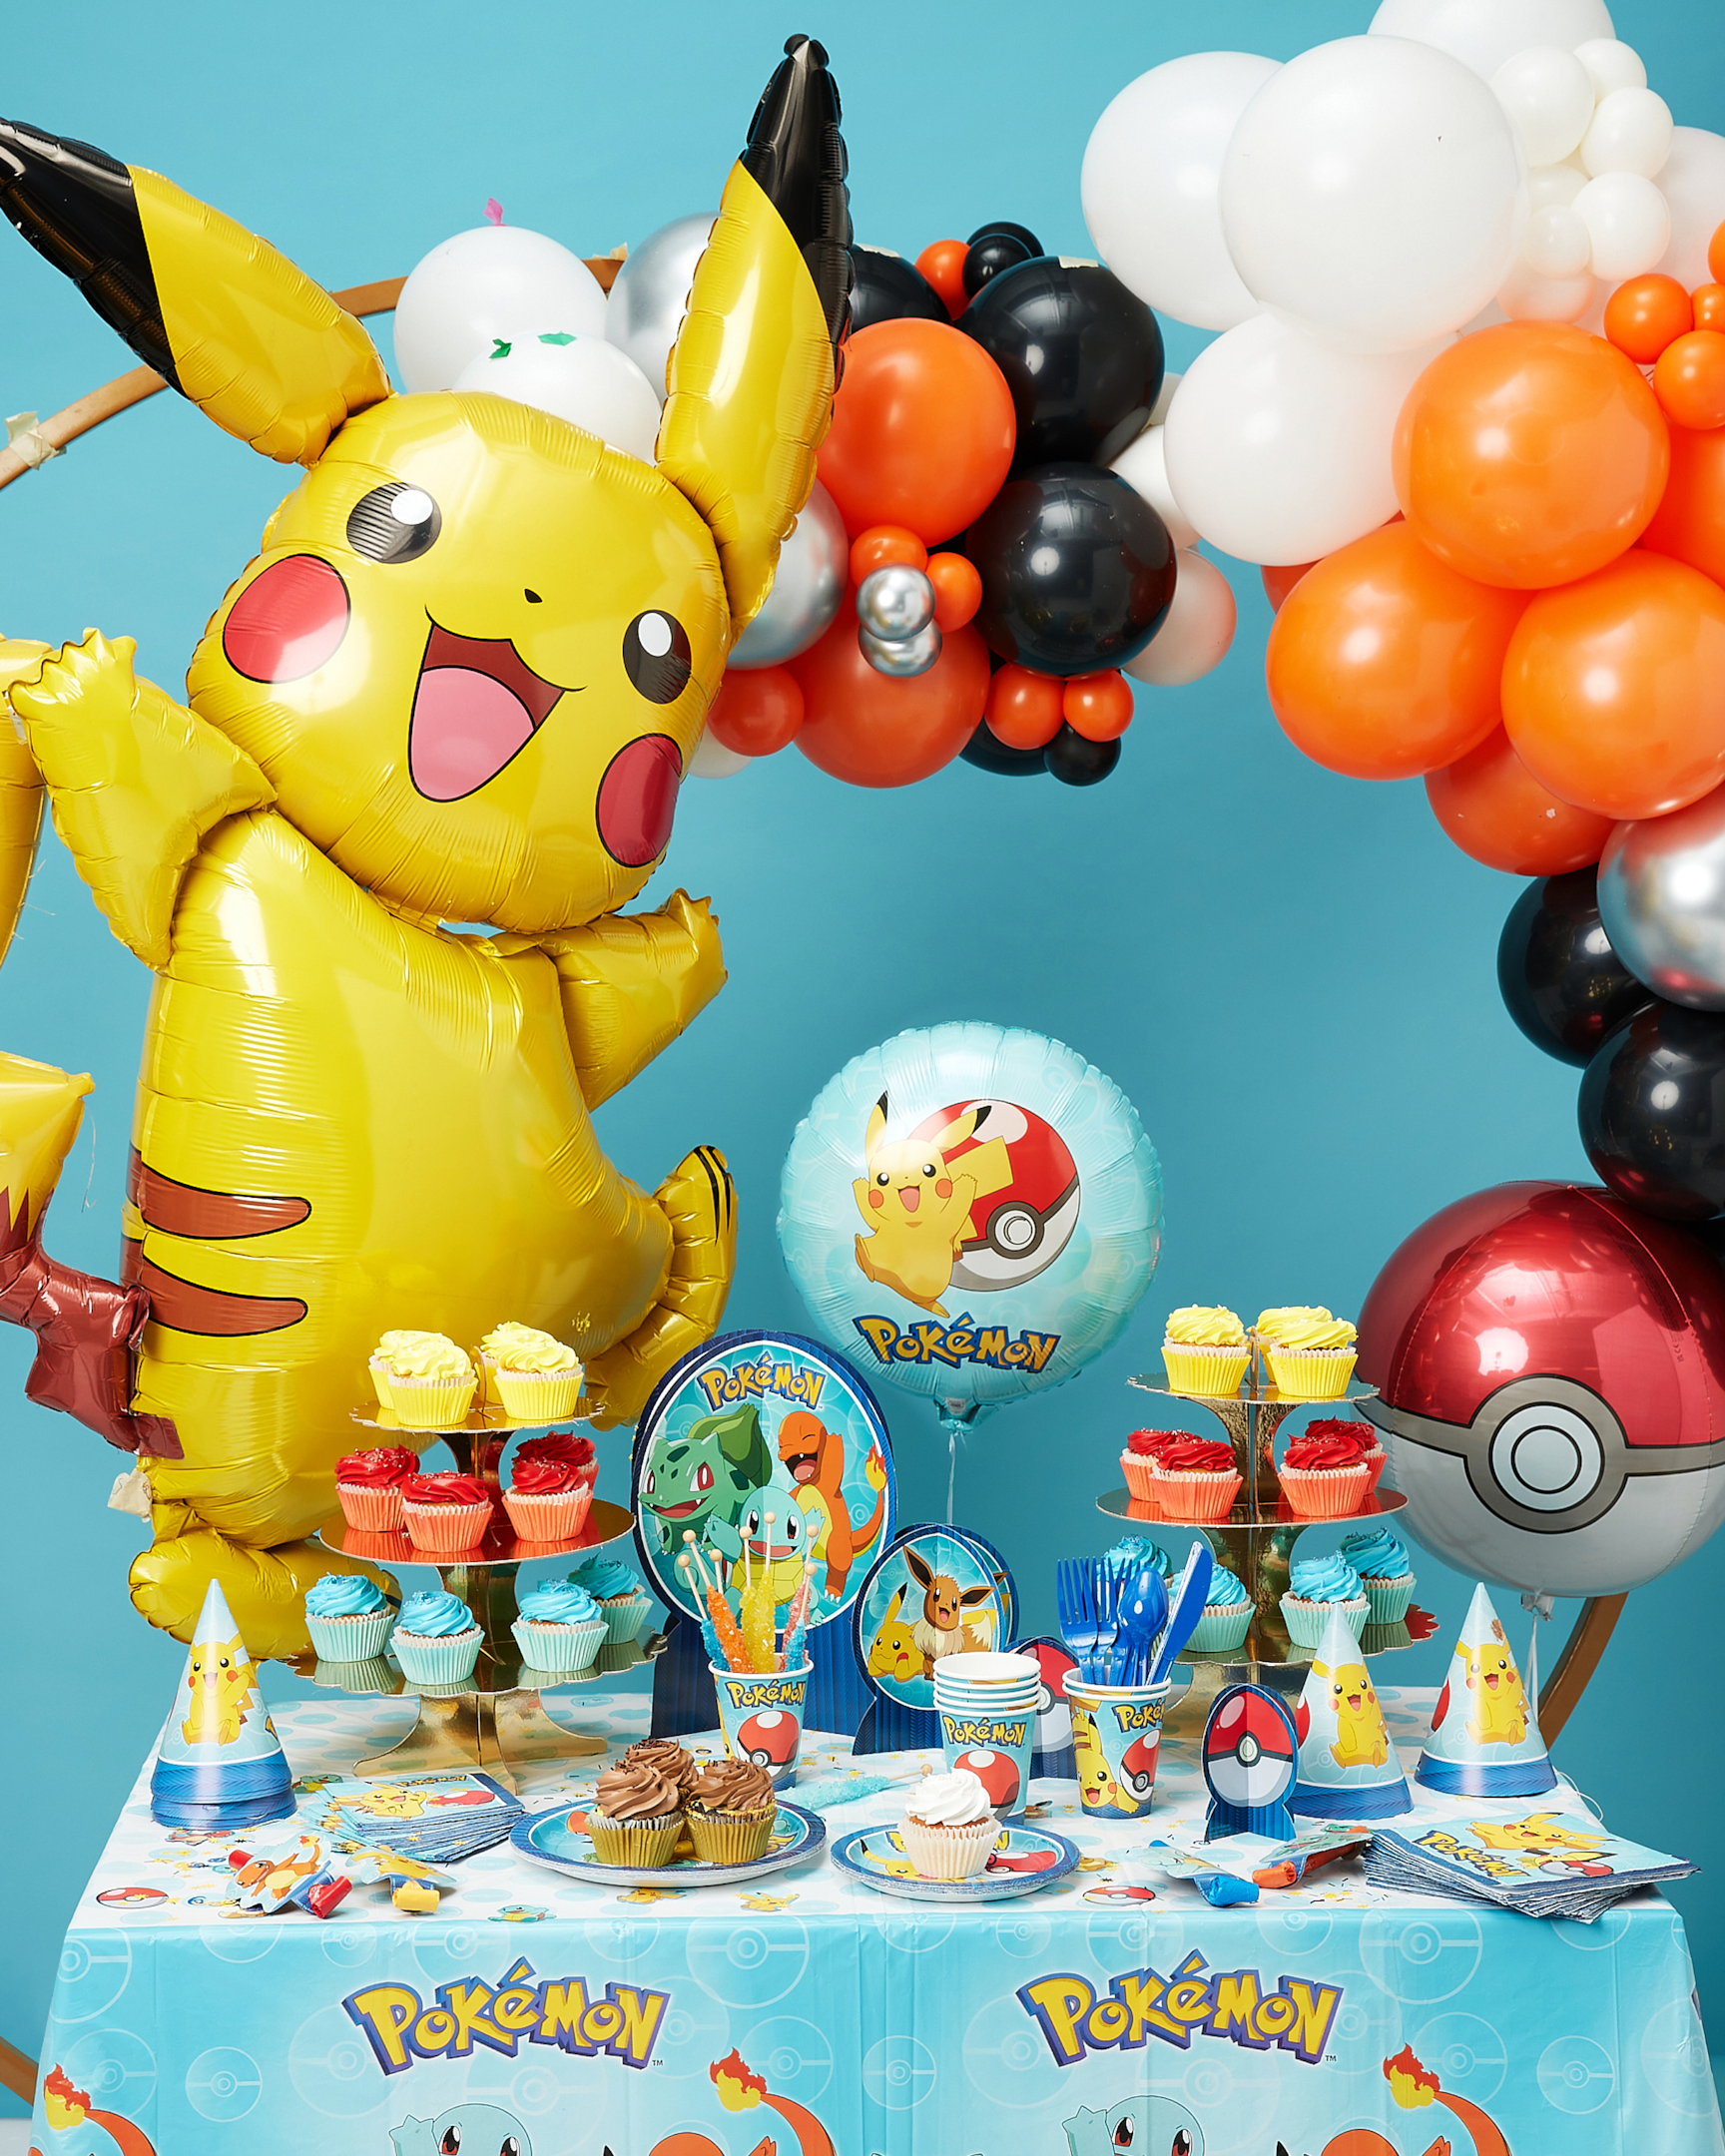 Pokémon Themed Birthday Party Idea